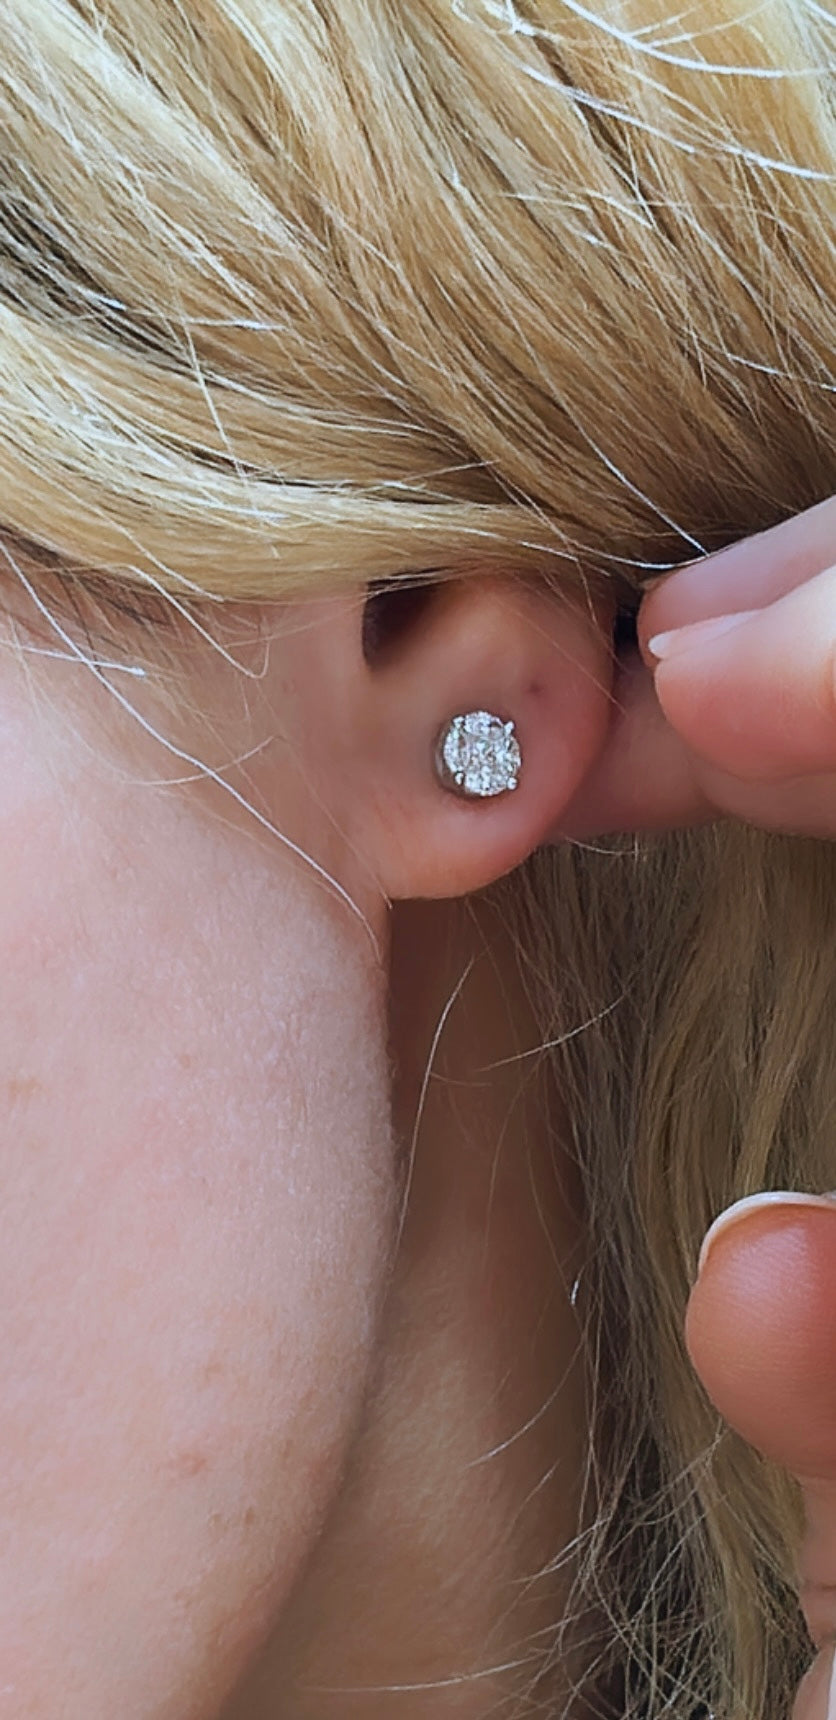 Invisible set Diamond Stud Earrings 0.45ct tw